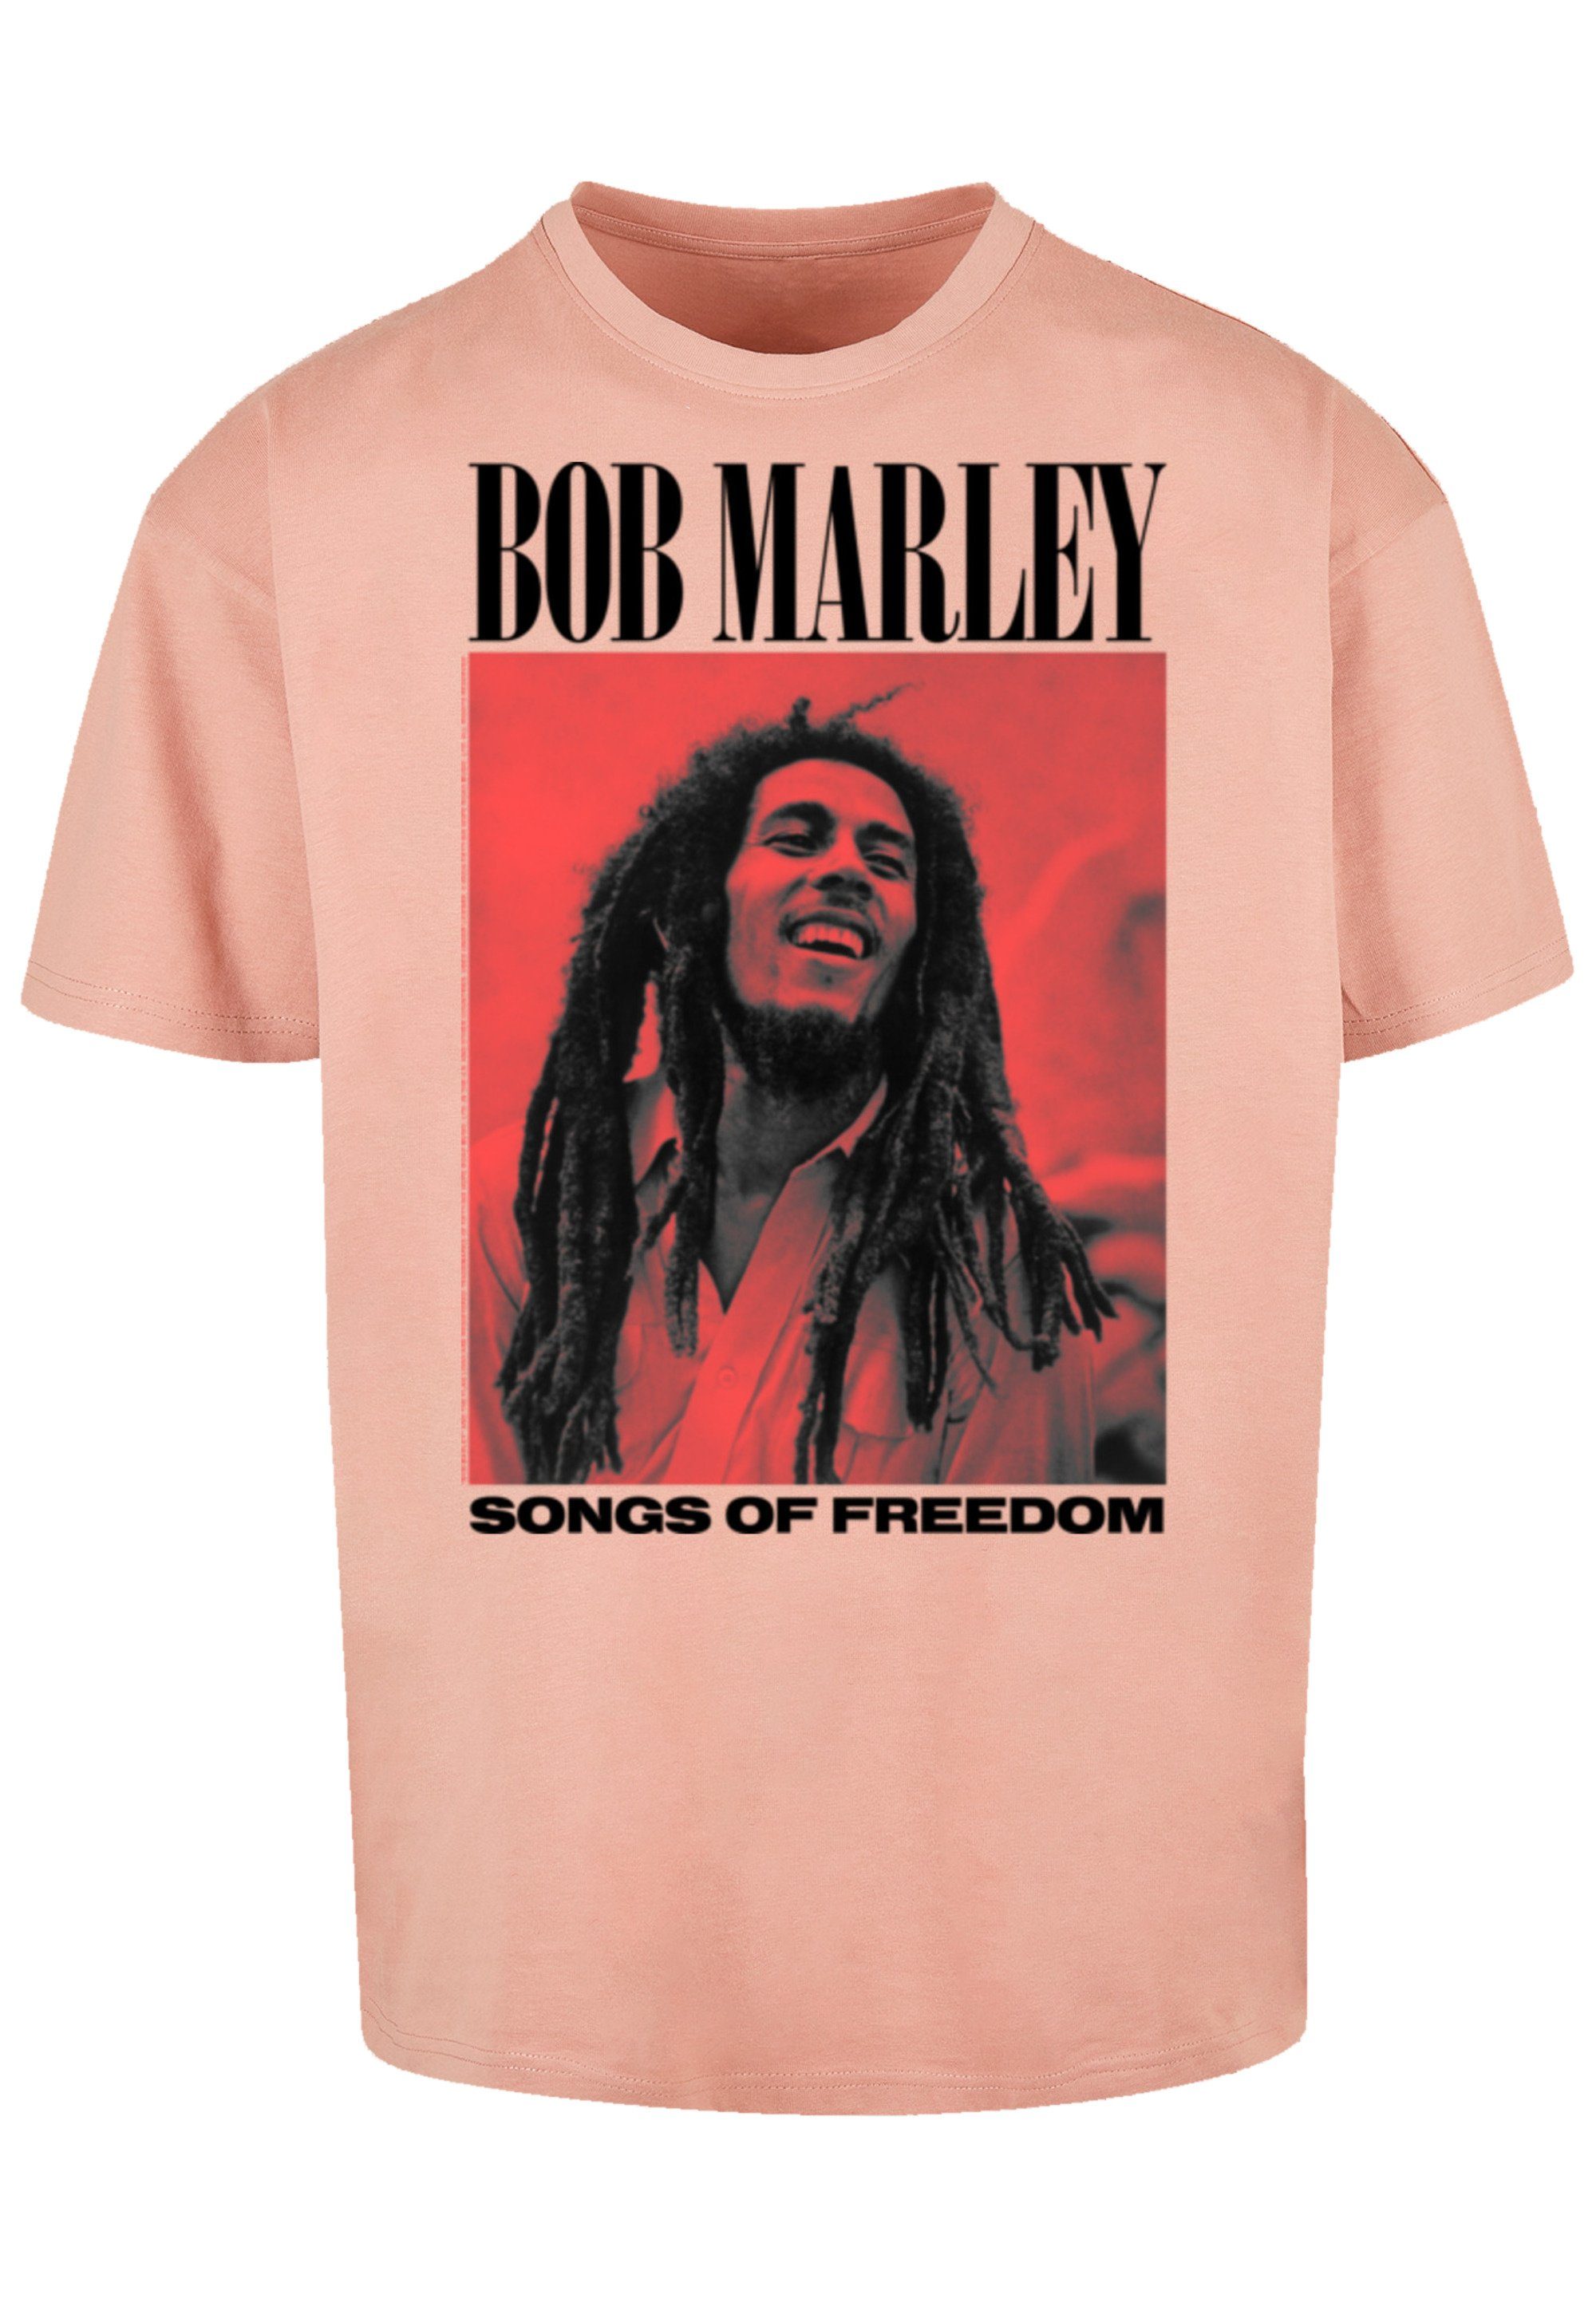 Qualität, Music Rock amber Songs By T-Shirt F4NT4STIC Musik, Marley Freedom Of Bob Off Premium Reggae